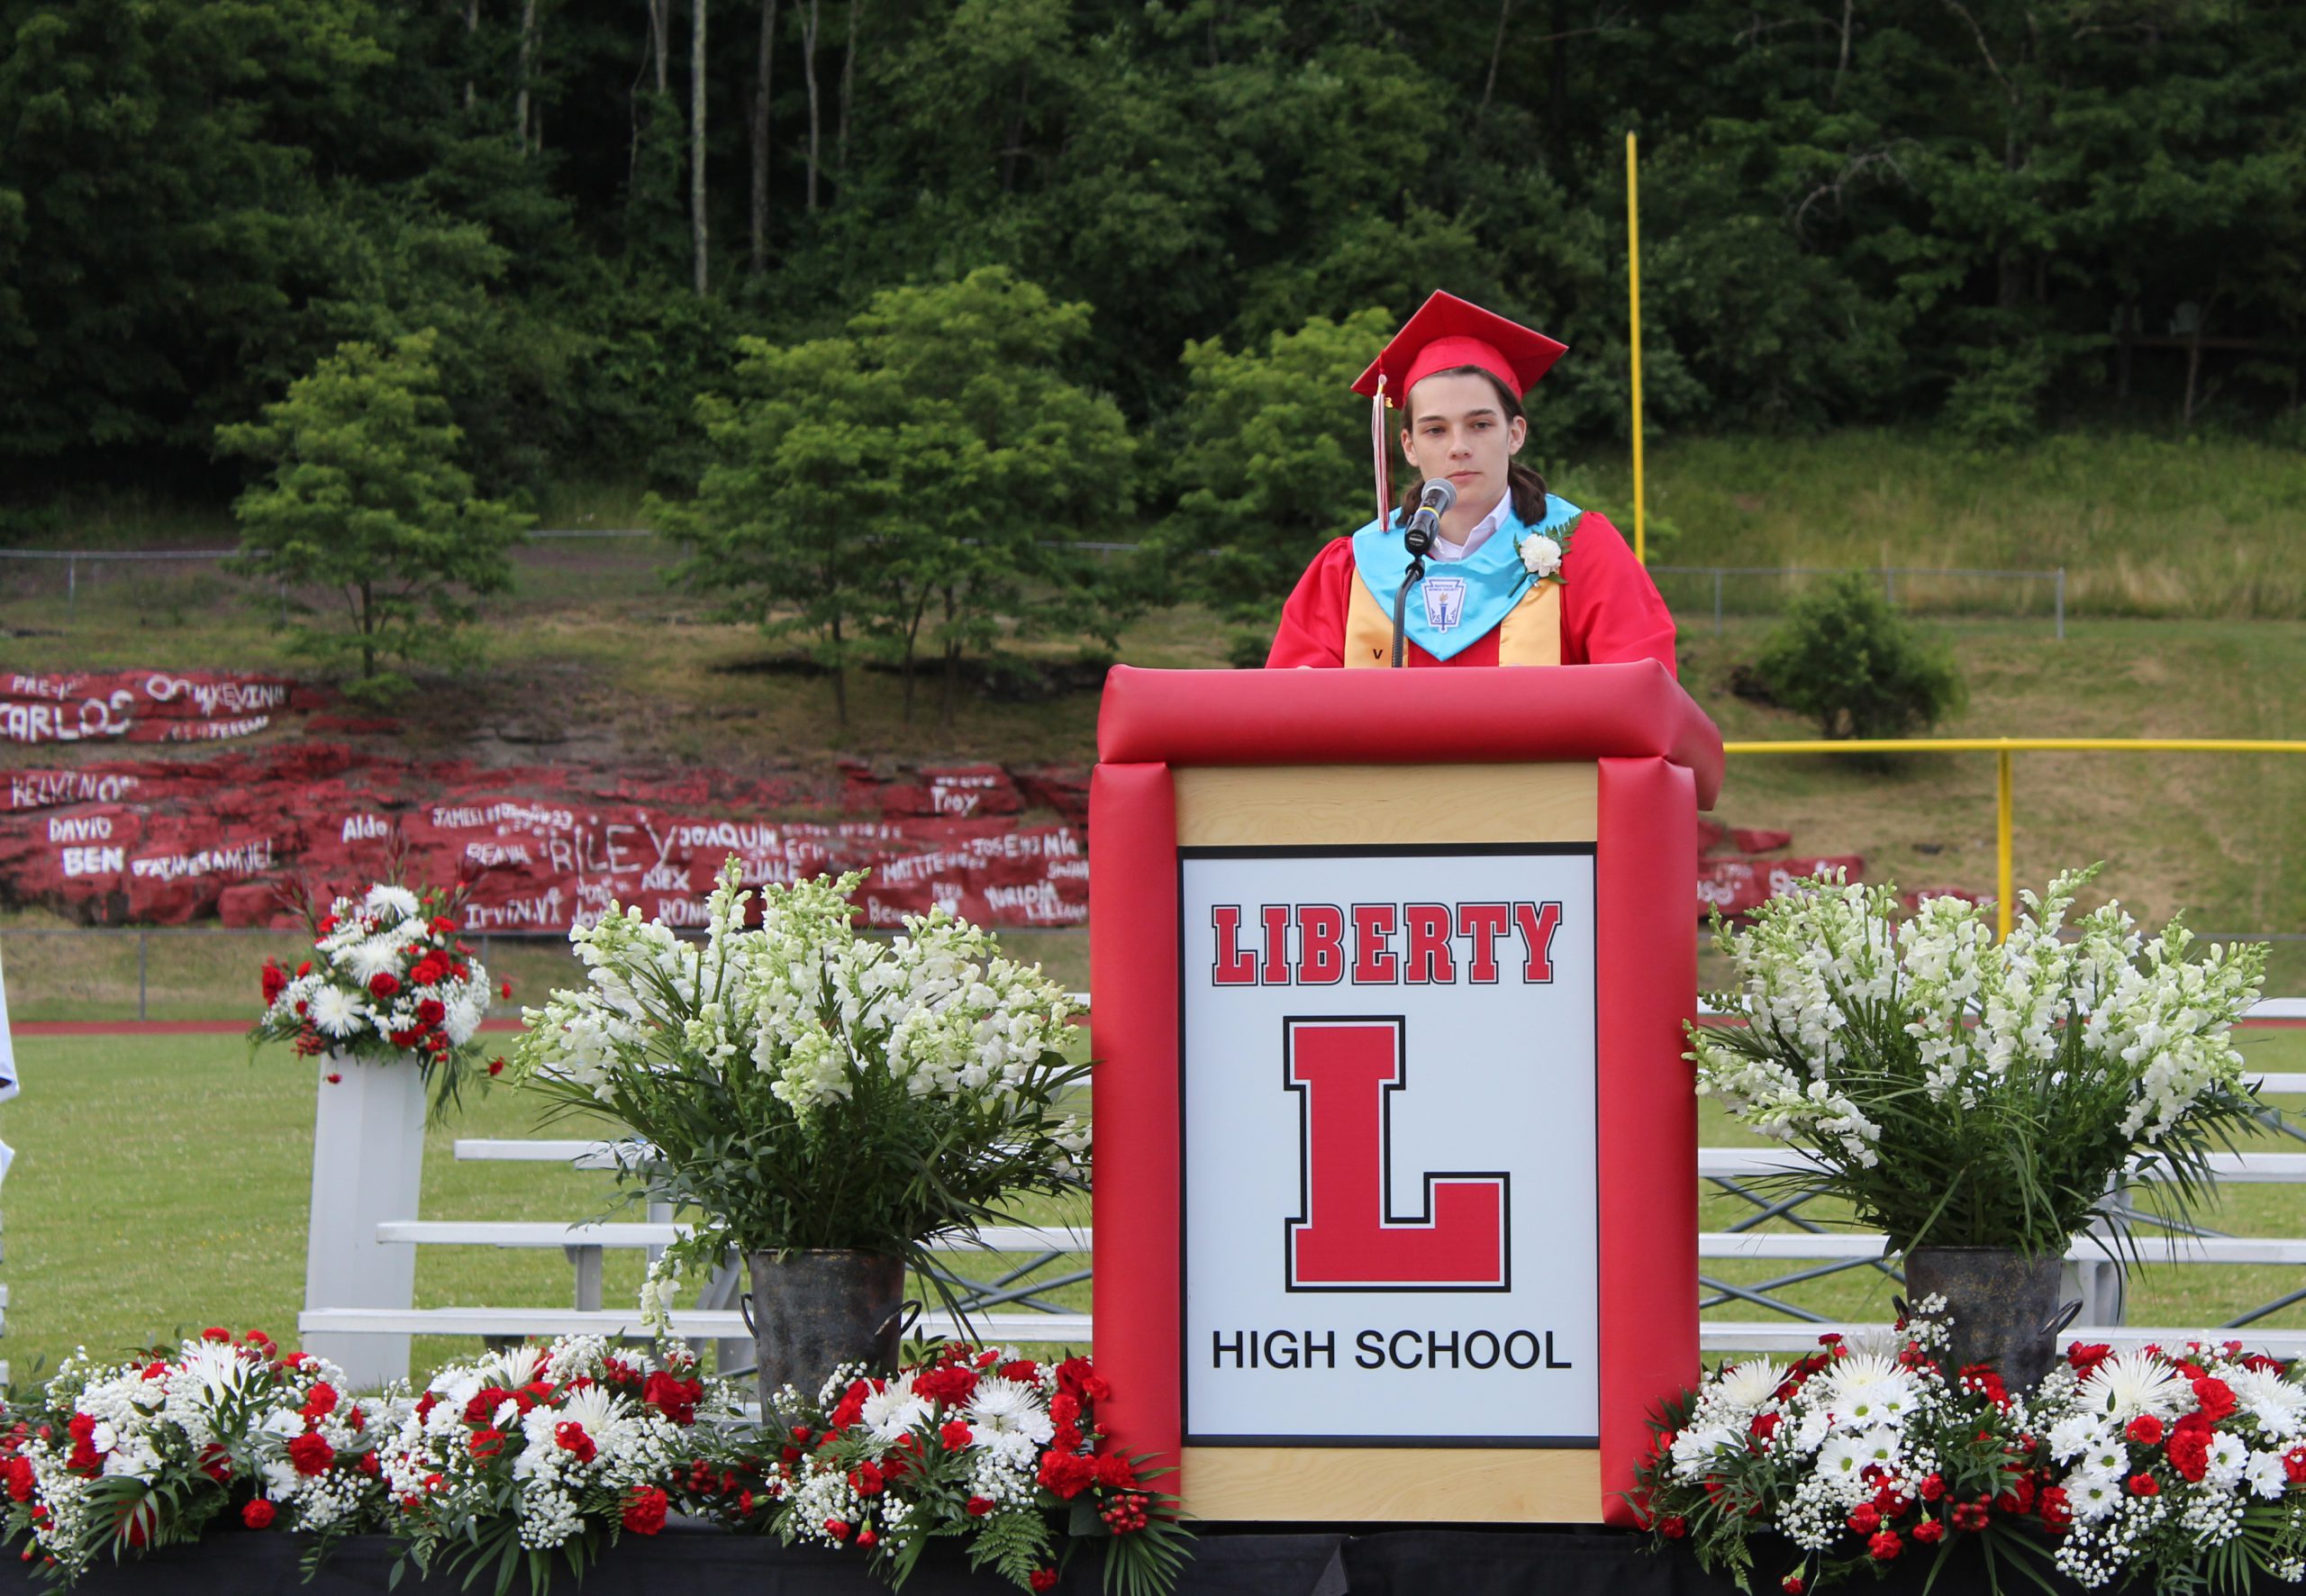 A graduate speaks at a podium